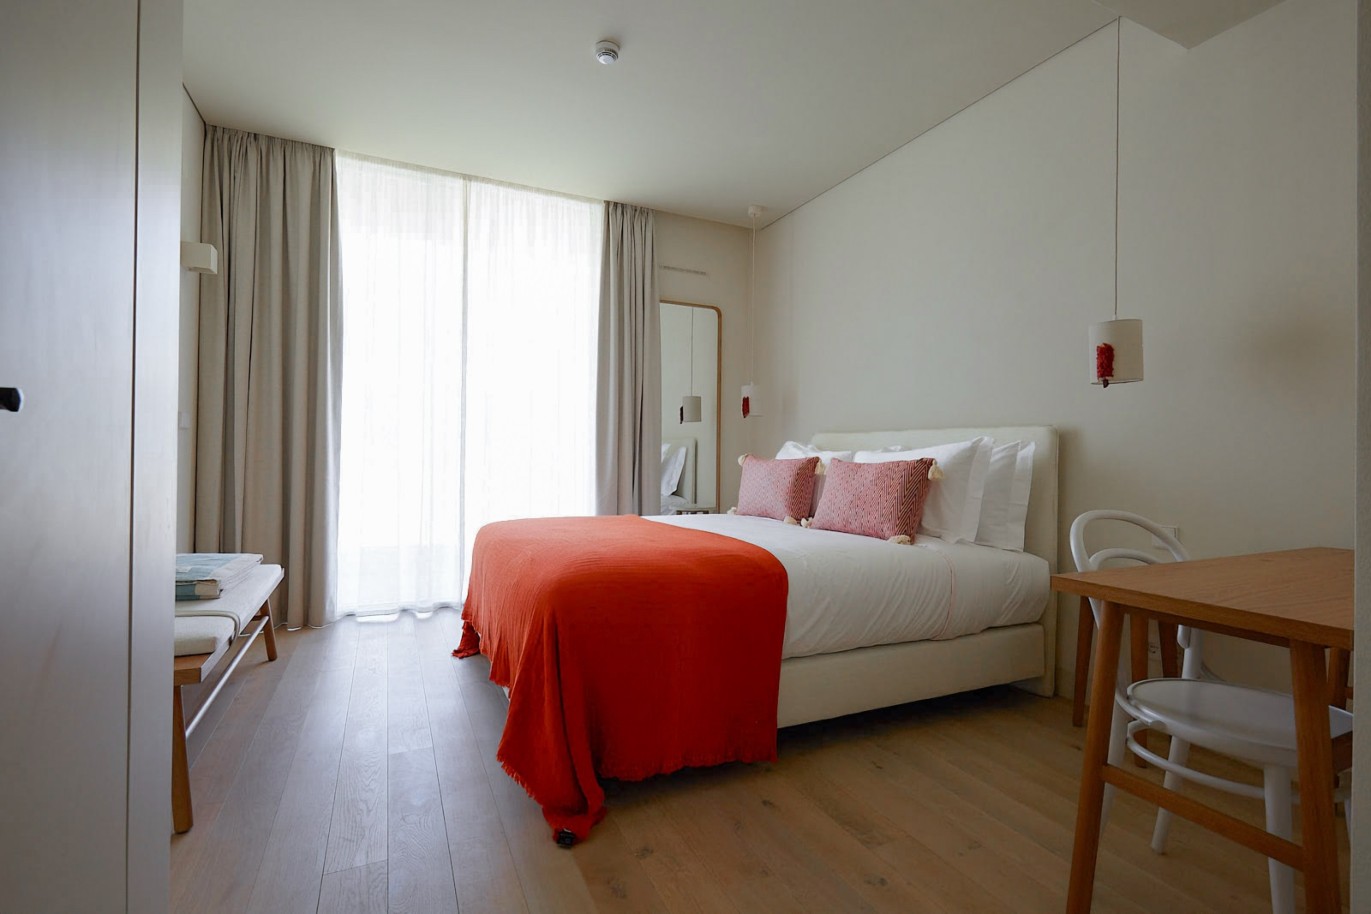 2 bedroom apartment in resort, for sale in Porches, Algarve_228791